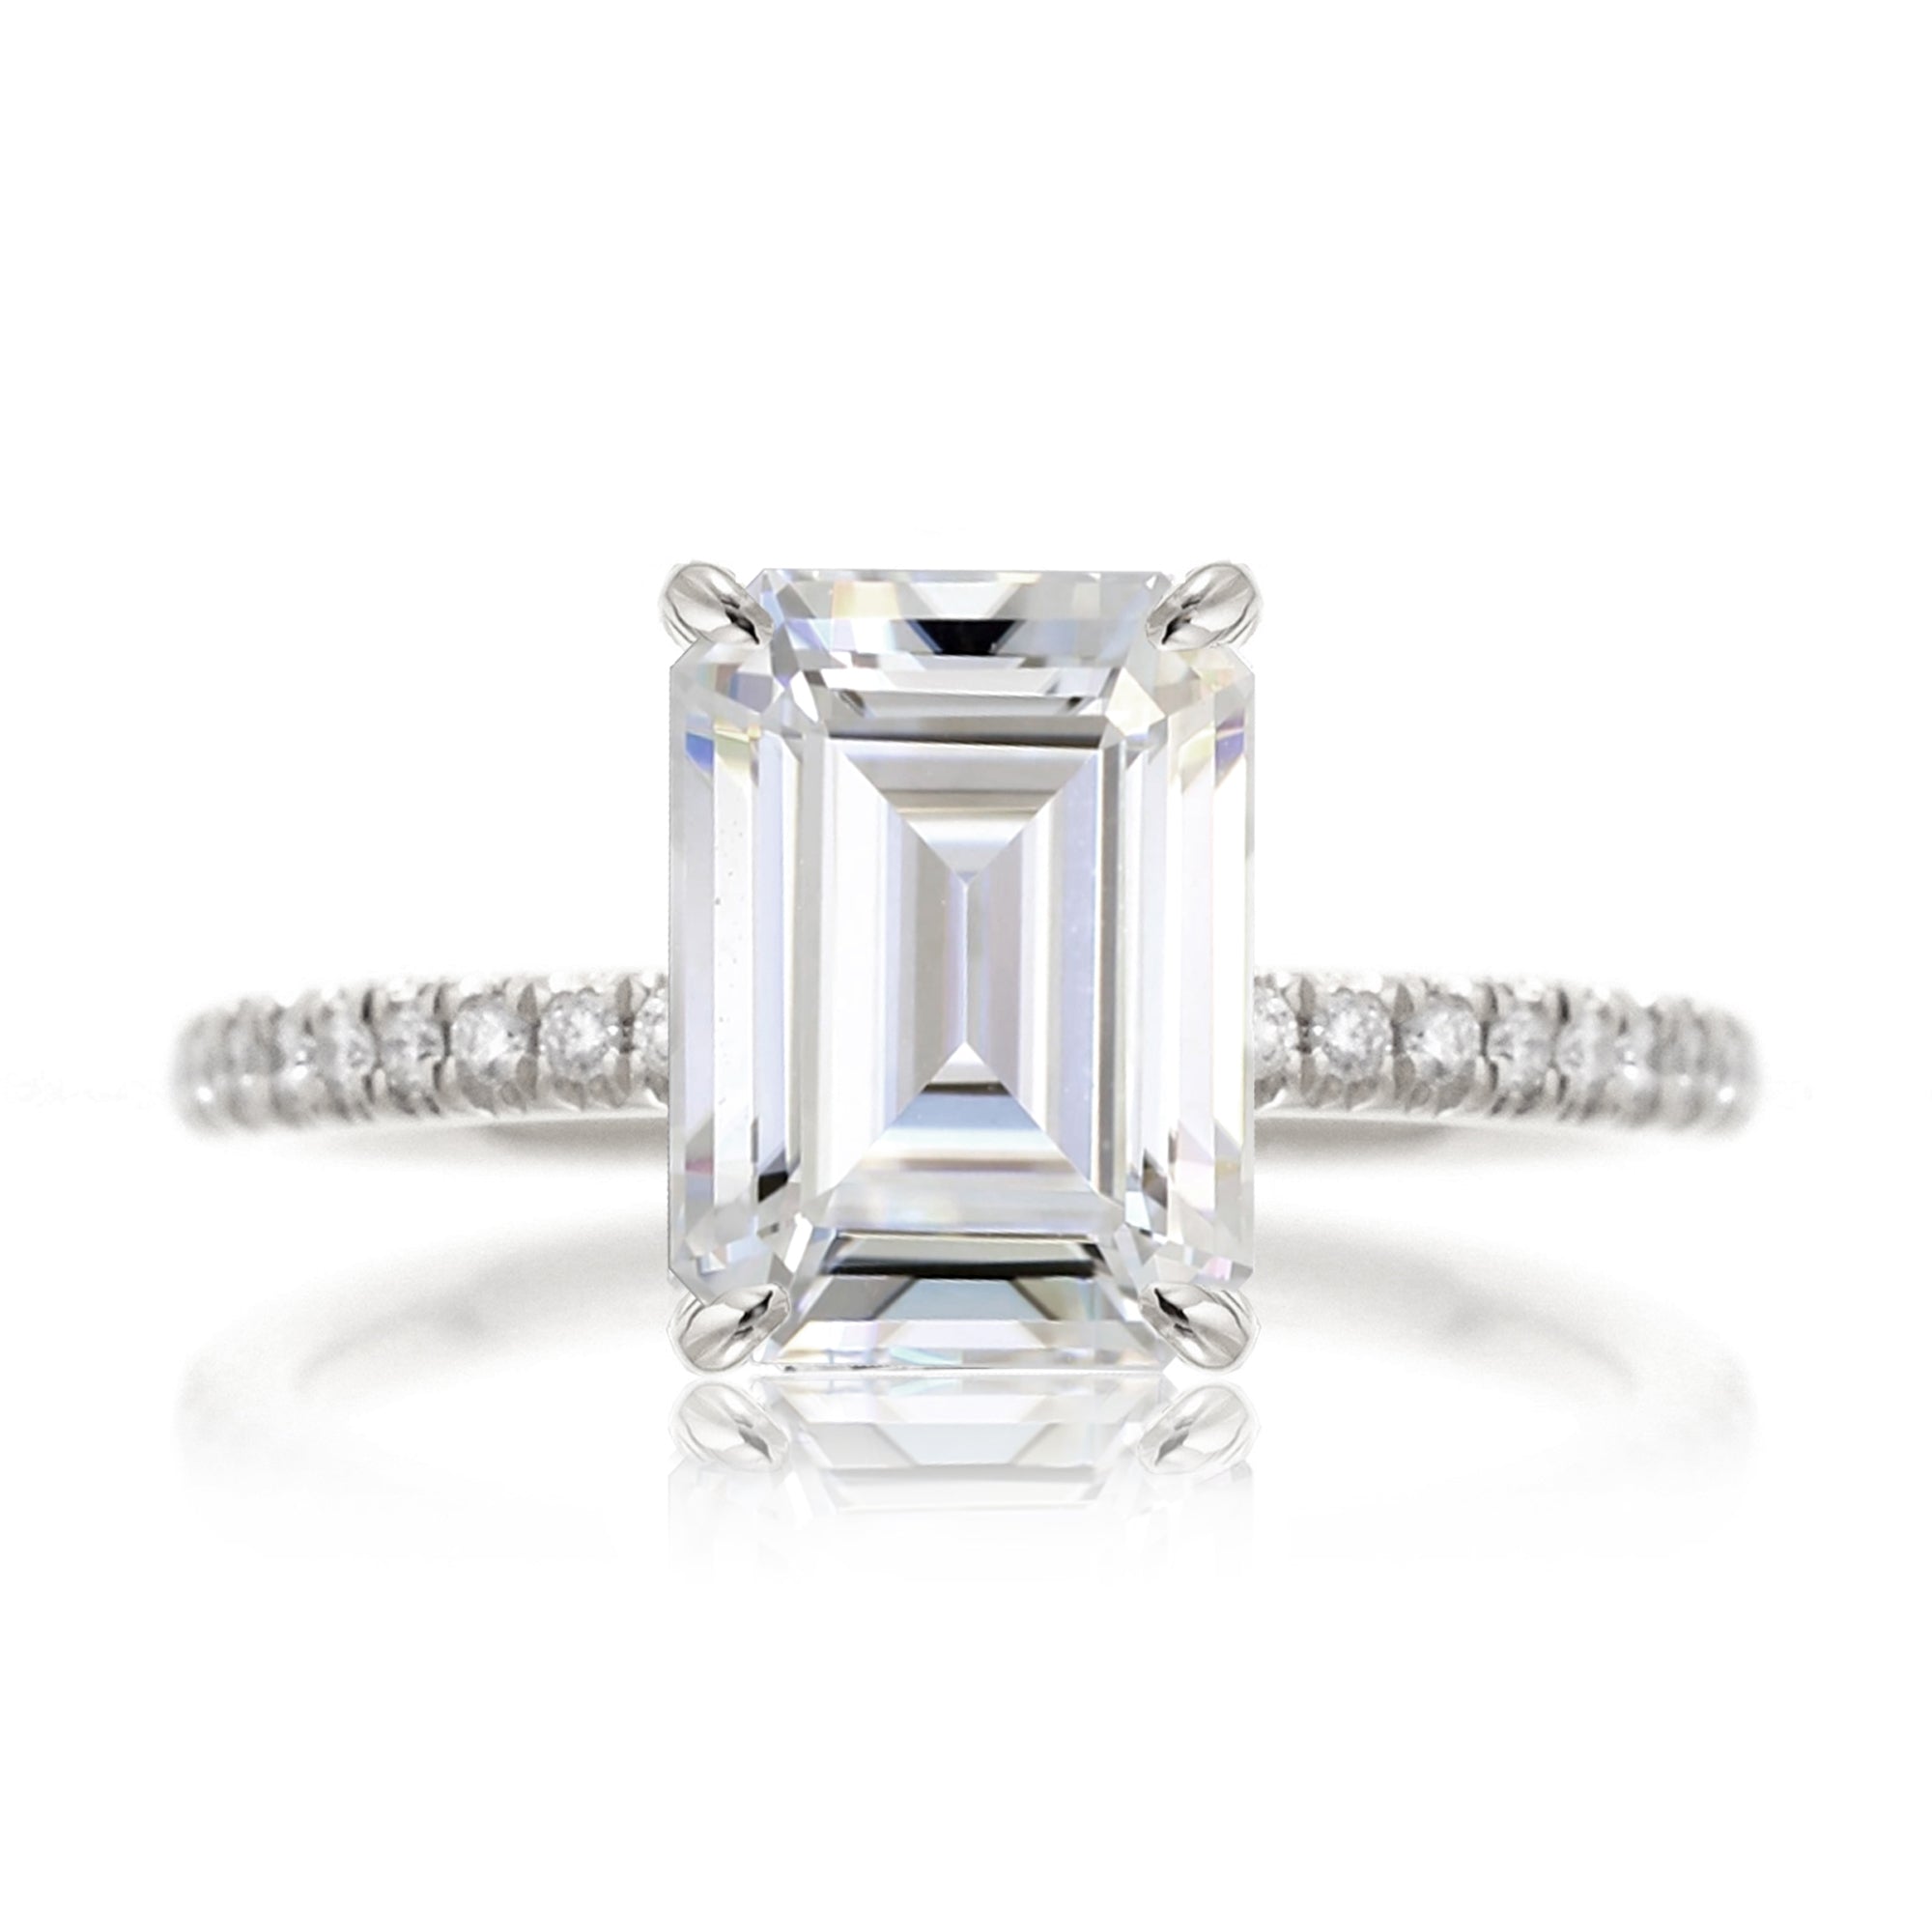 Emerald cut moissanite diamond band engagement ring white gold - The Ava